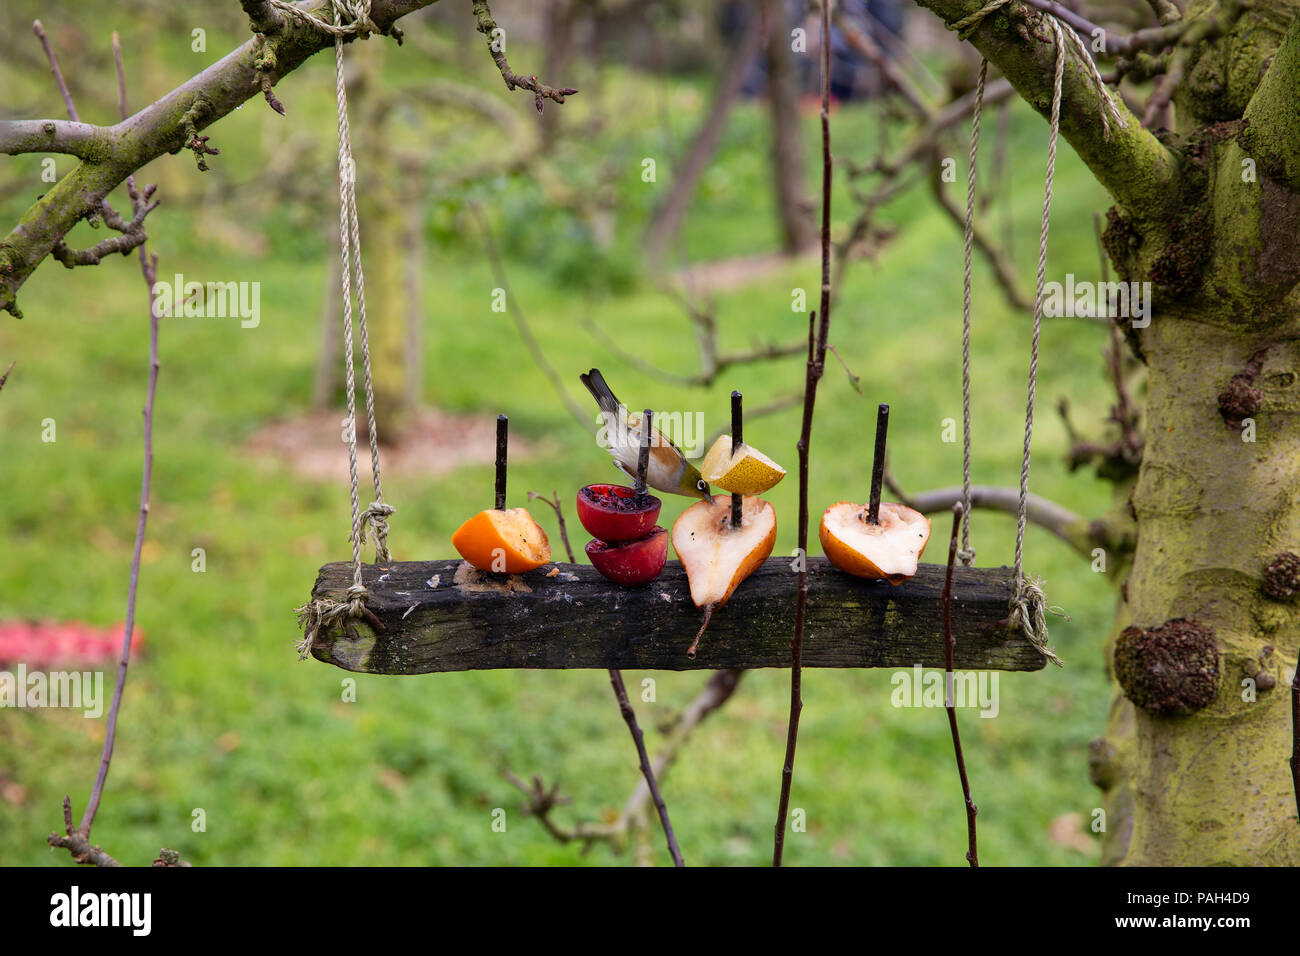 Bird eating fruit Stock Photo